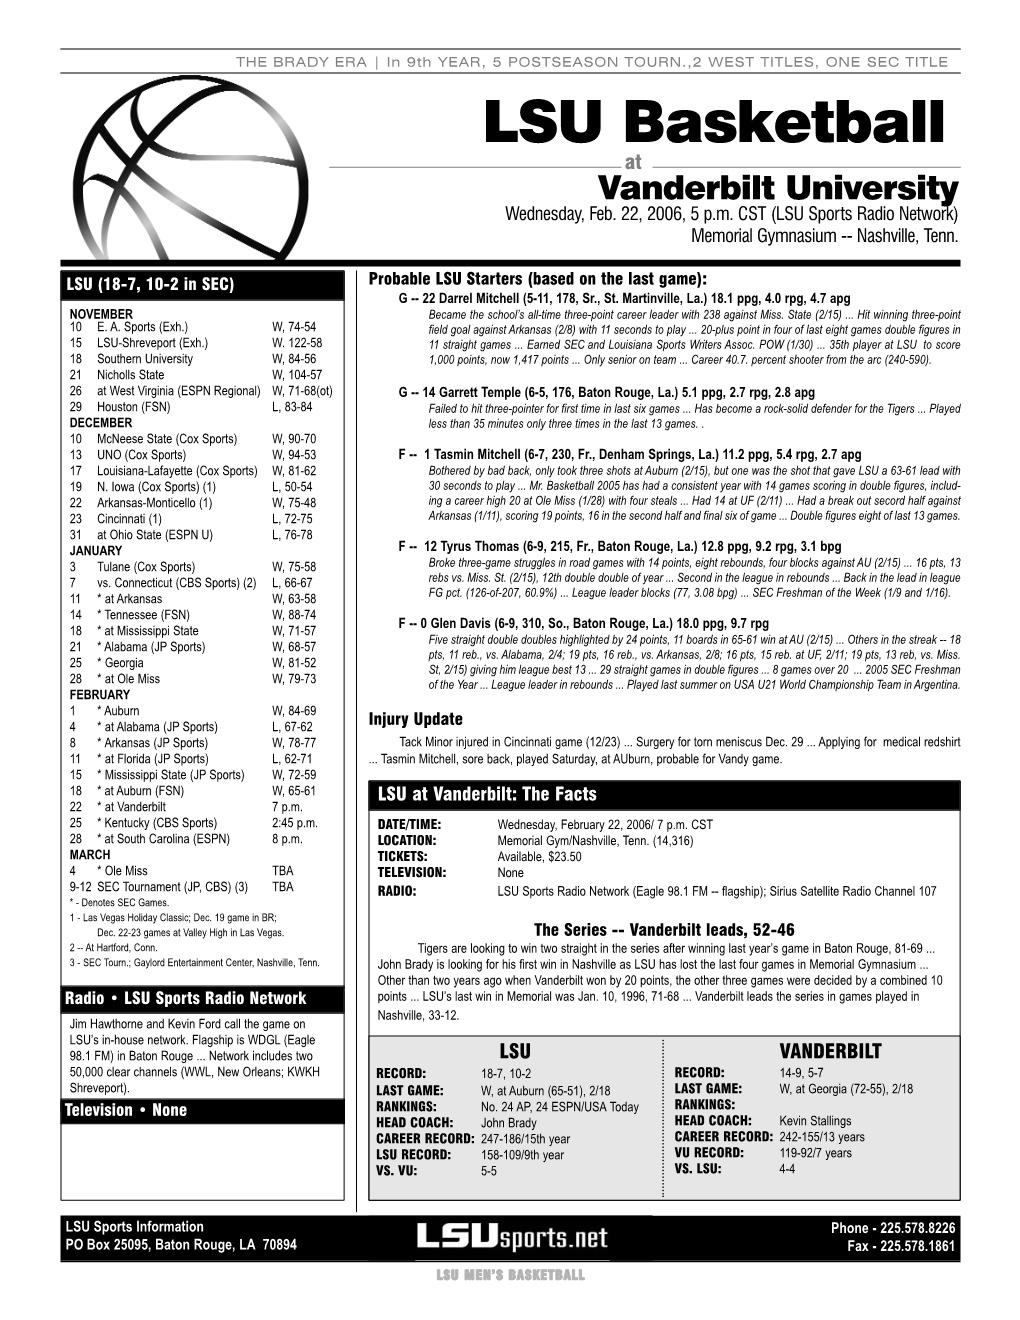 LSU Basketball at Vanderbilt University Wednesday, Feb